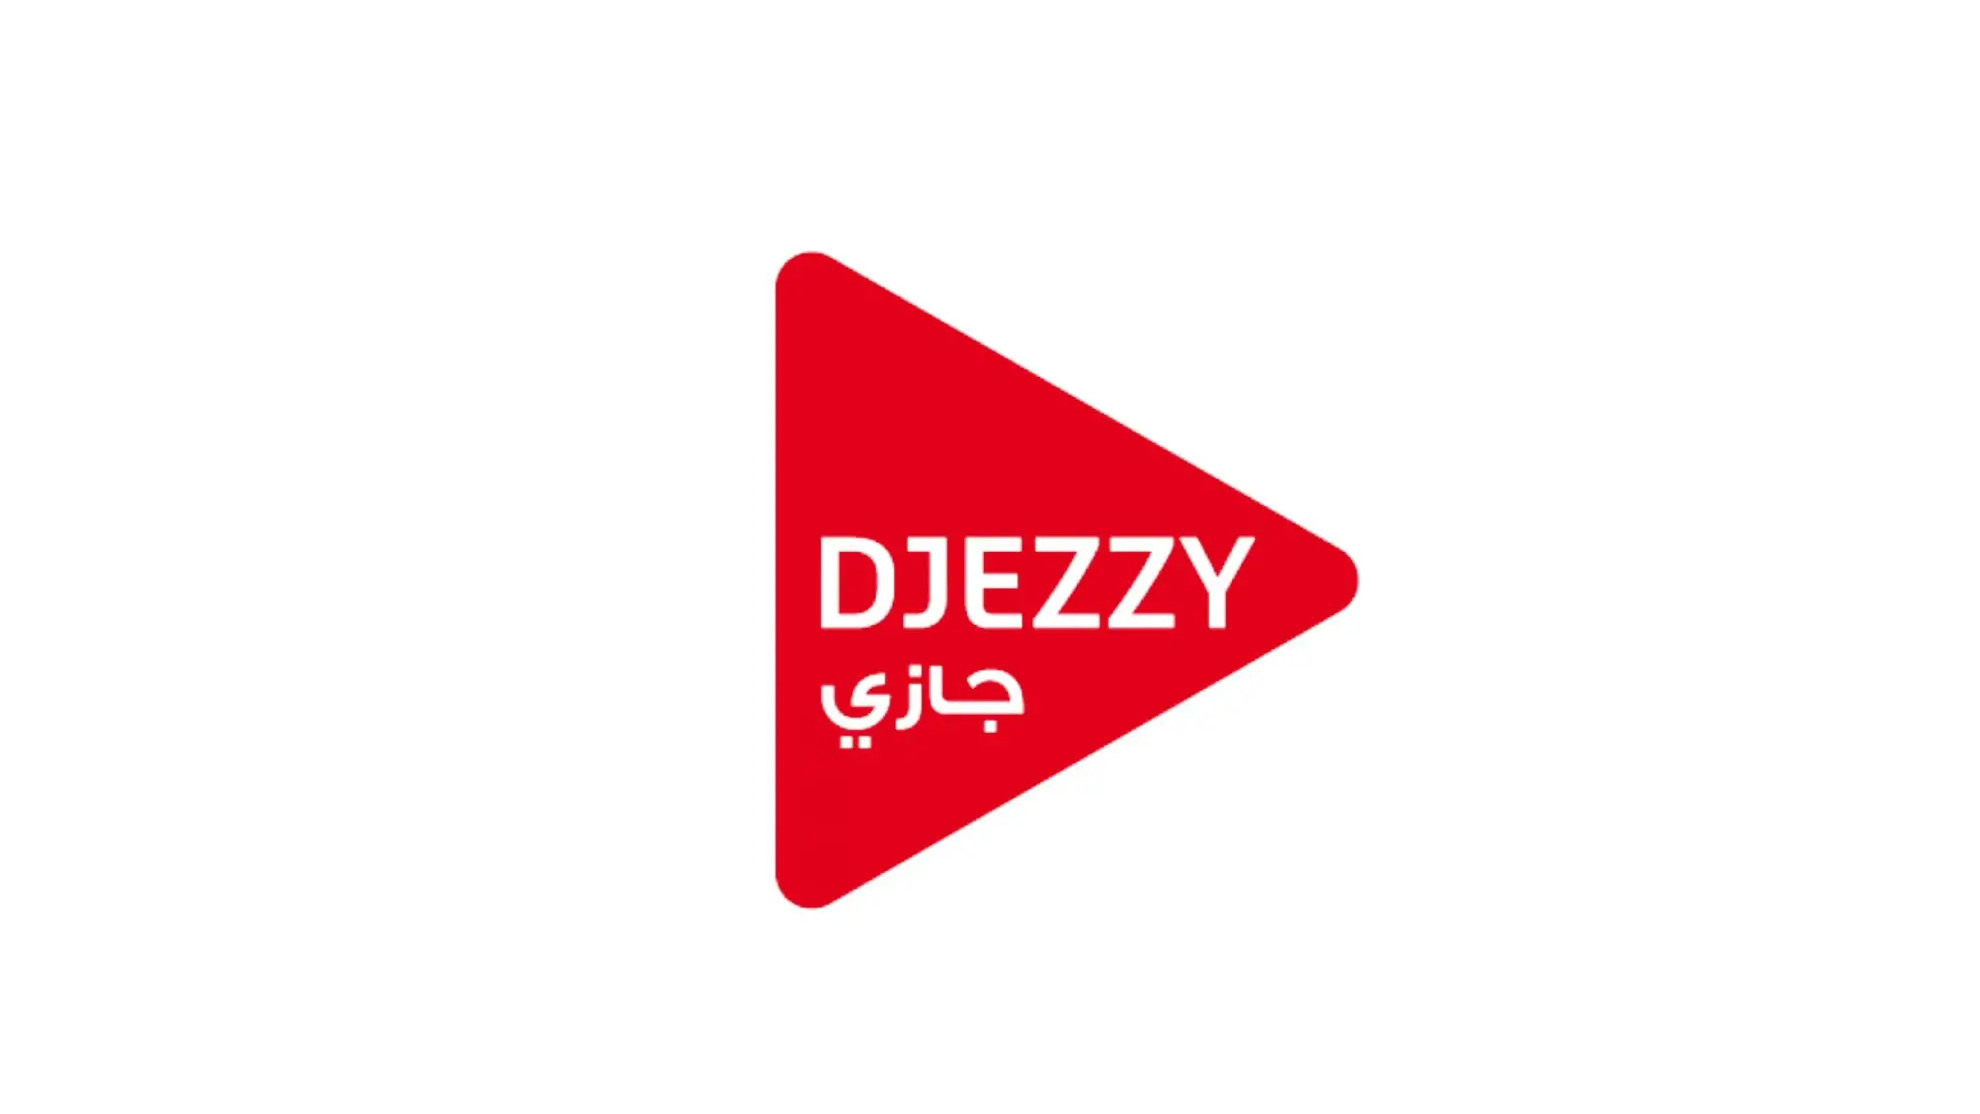 [$ 1.36] Djezzy 100 DZD Mobile Top-up DZ